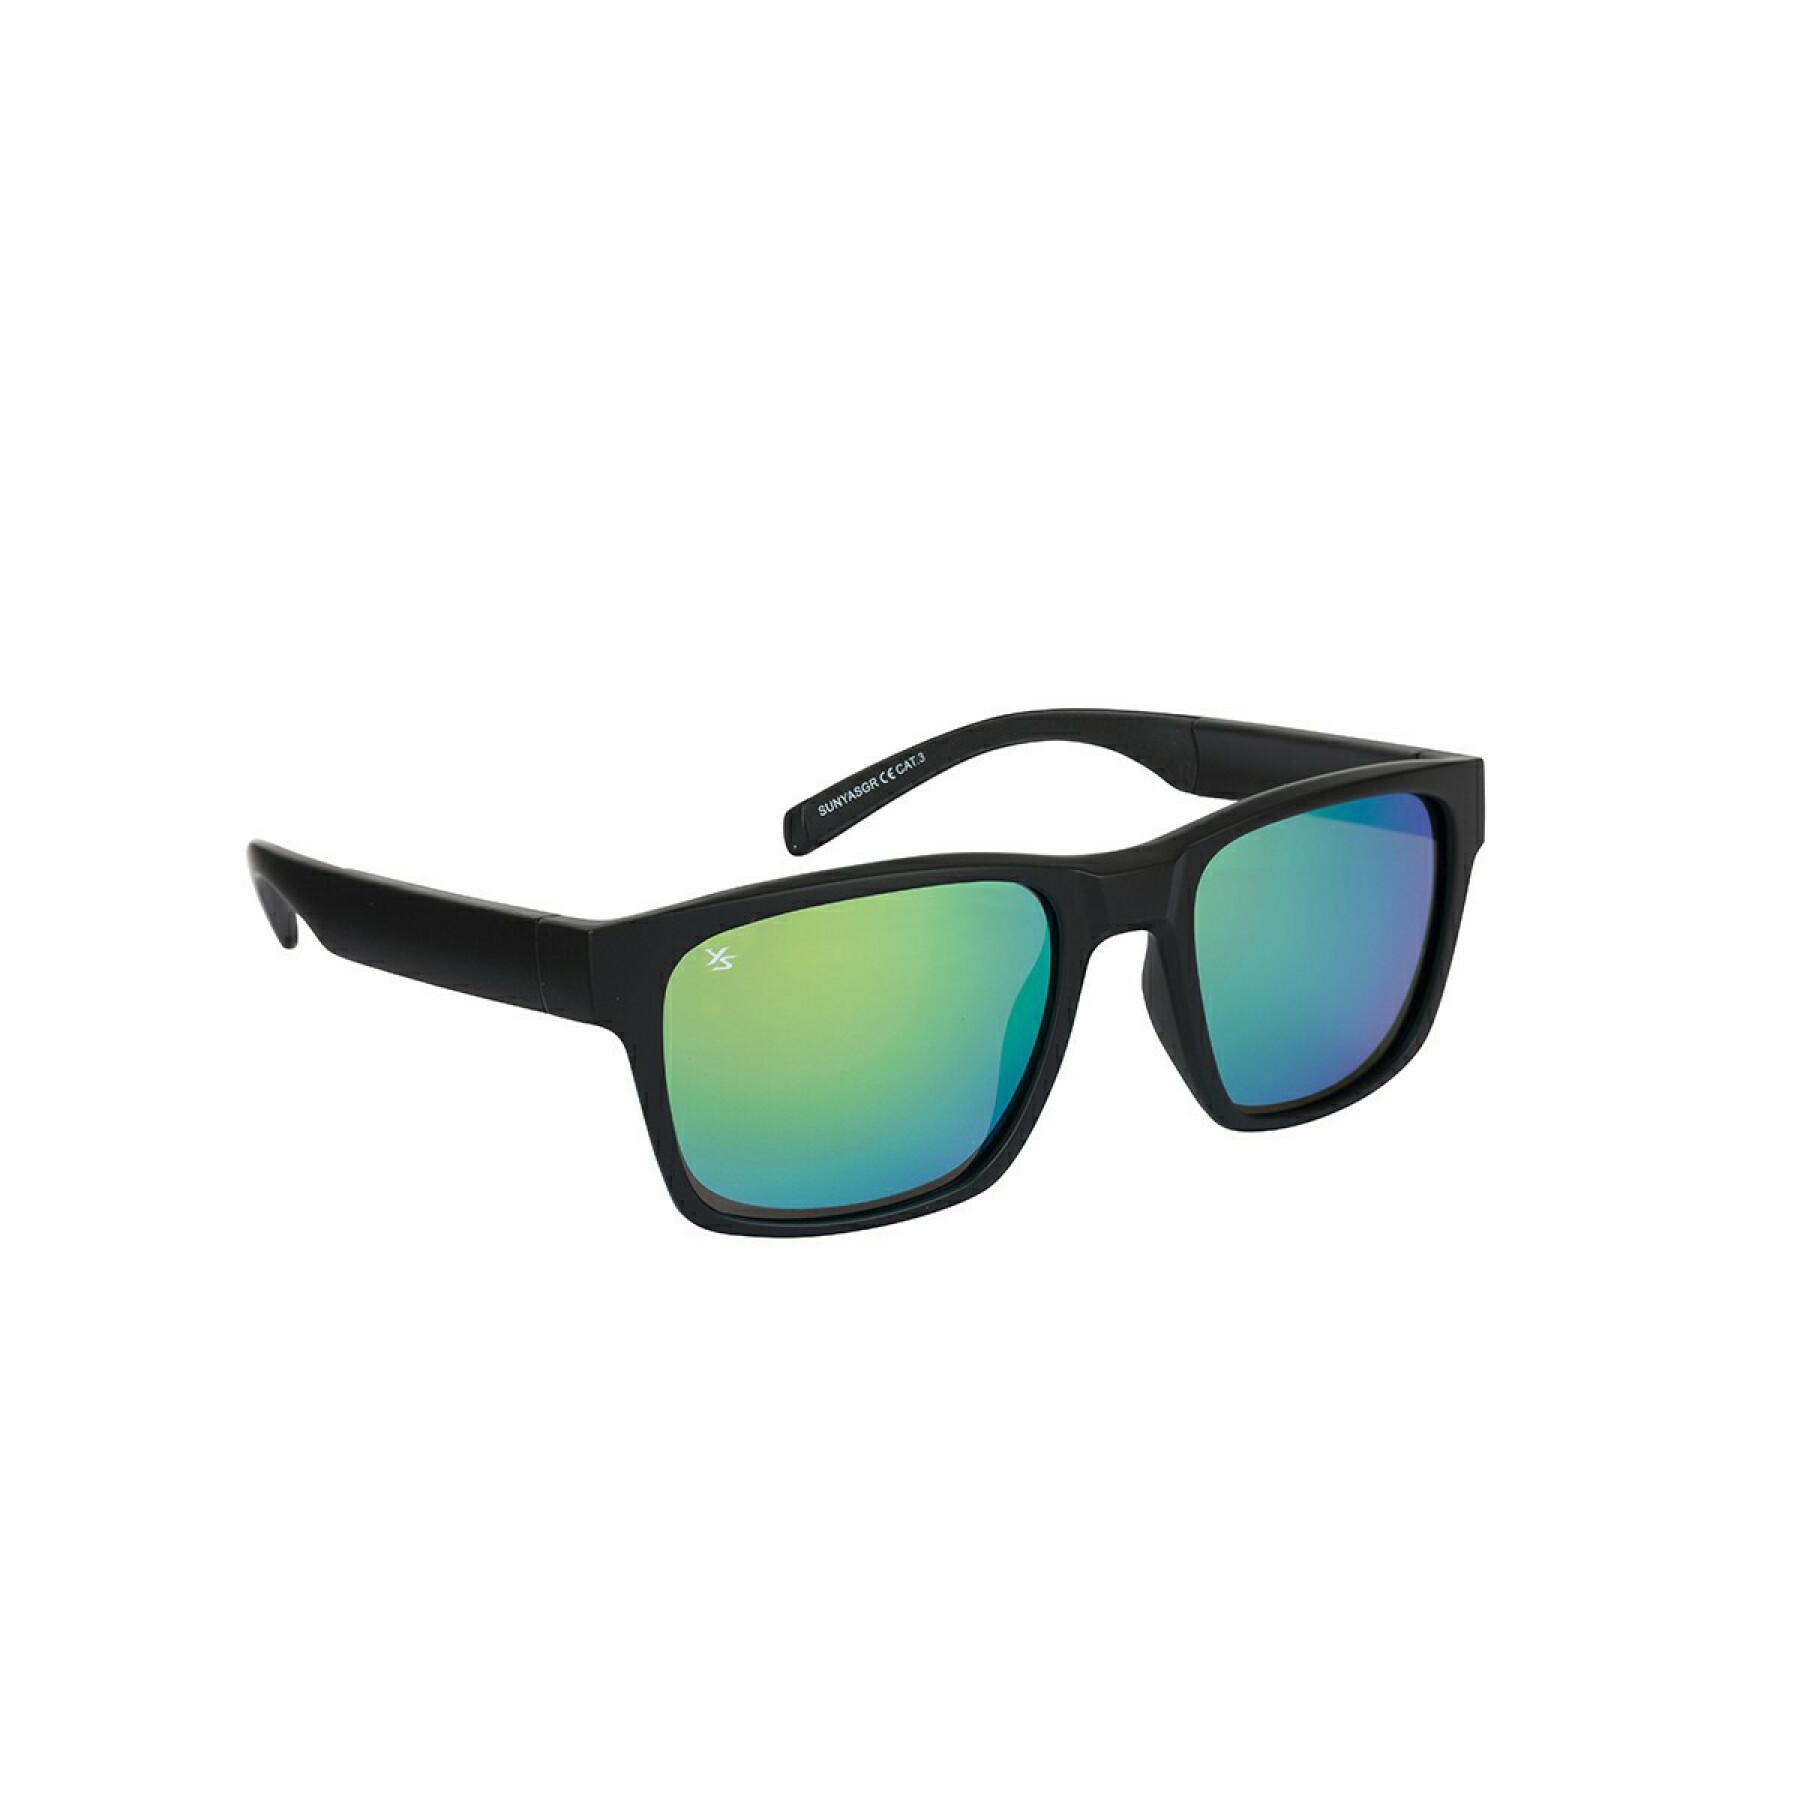 Sunglasses Shimano Yasei Green